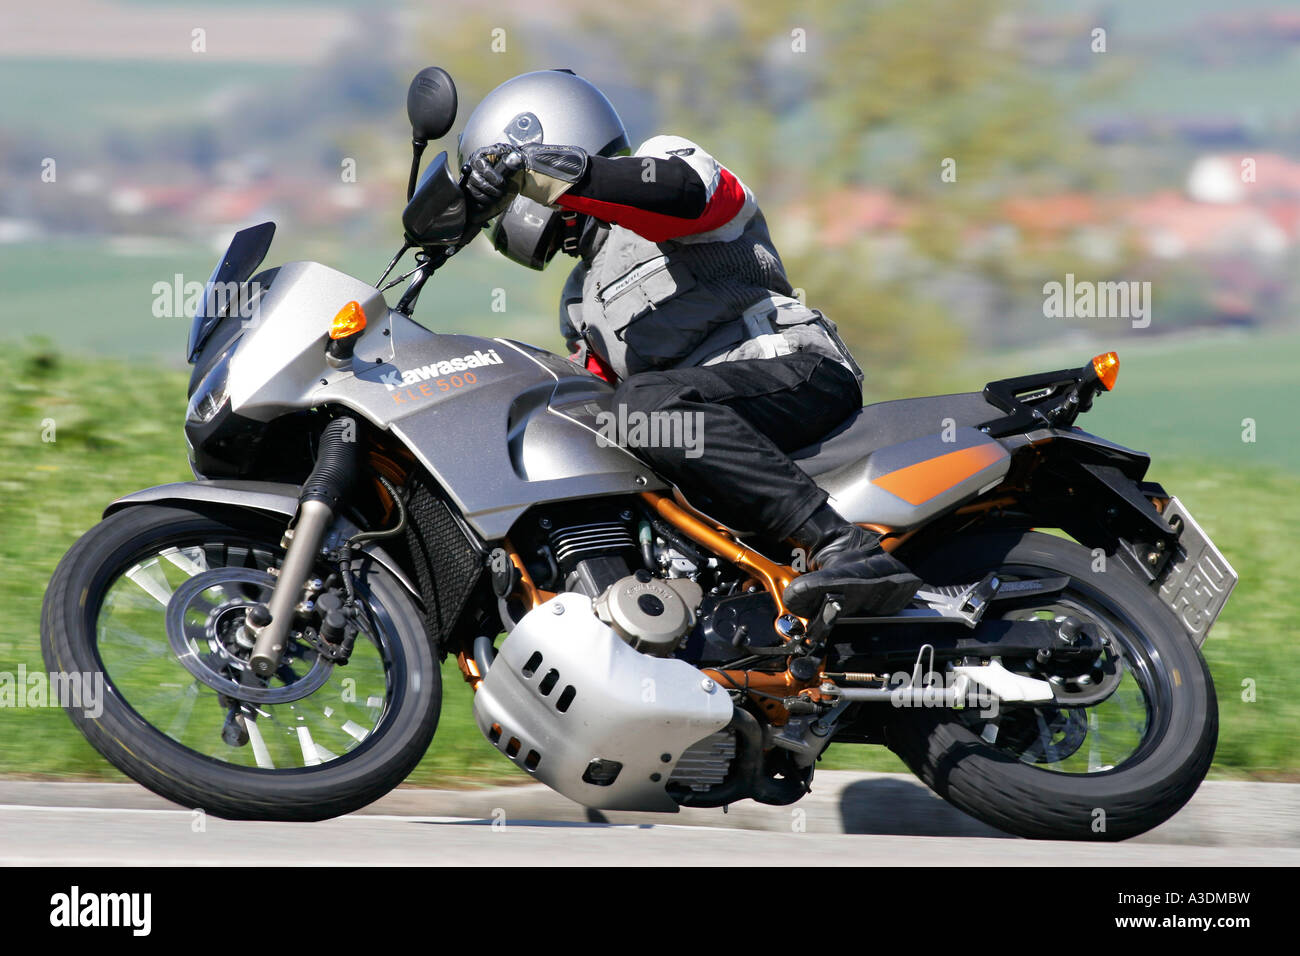 Kawasaki KLE 500 motorcycle Stock Photo - Alamy